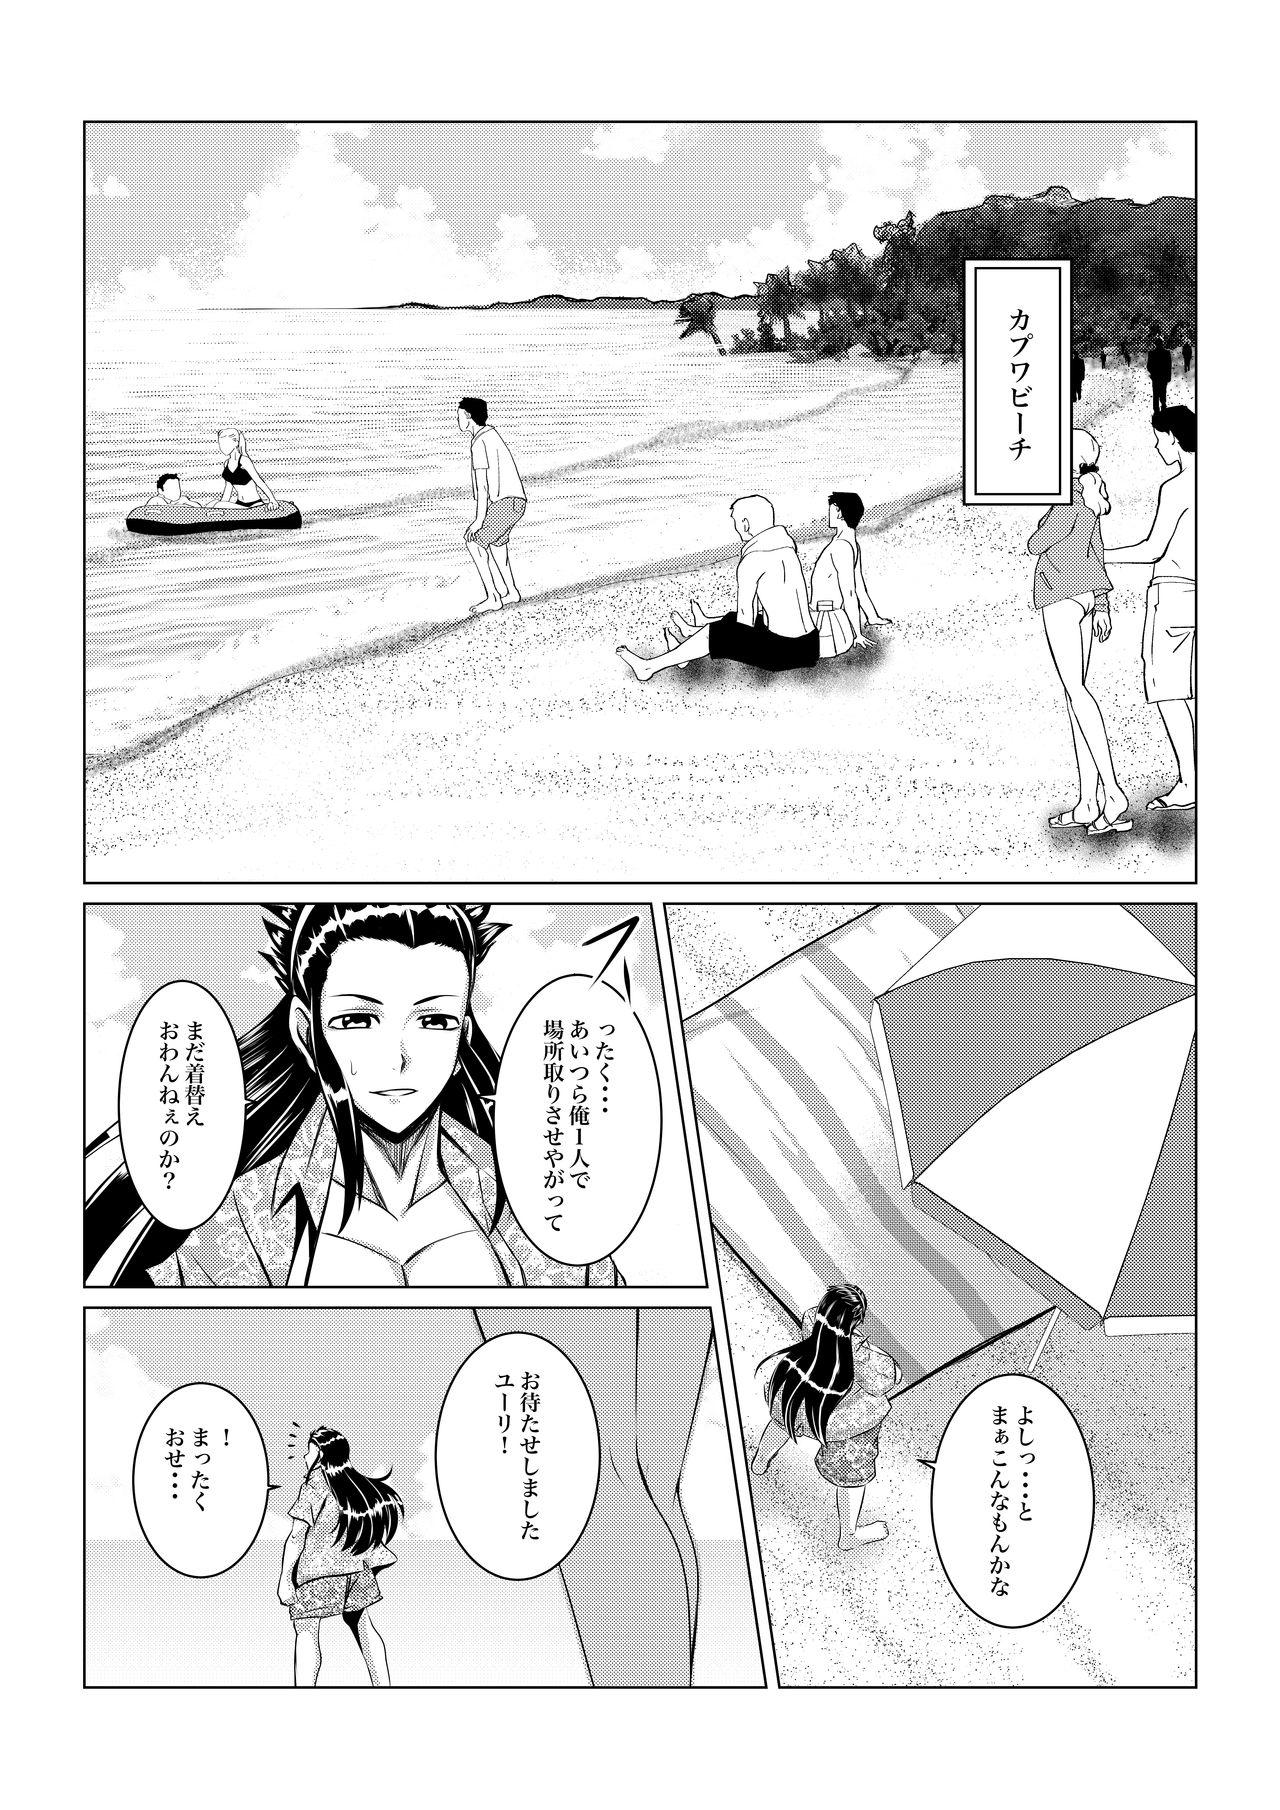 Perfect Teen Gekka Midarezaki - Tales of vesperia Gonzo - Page 2